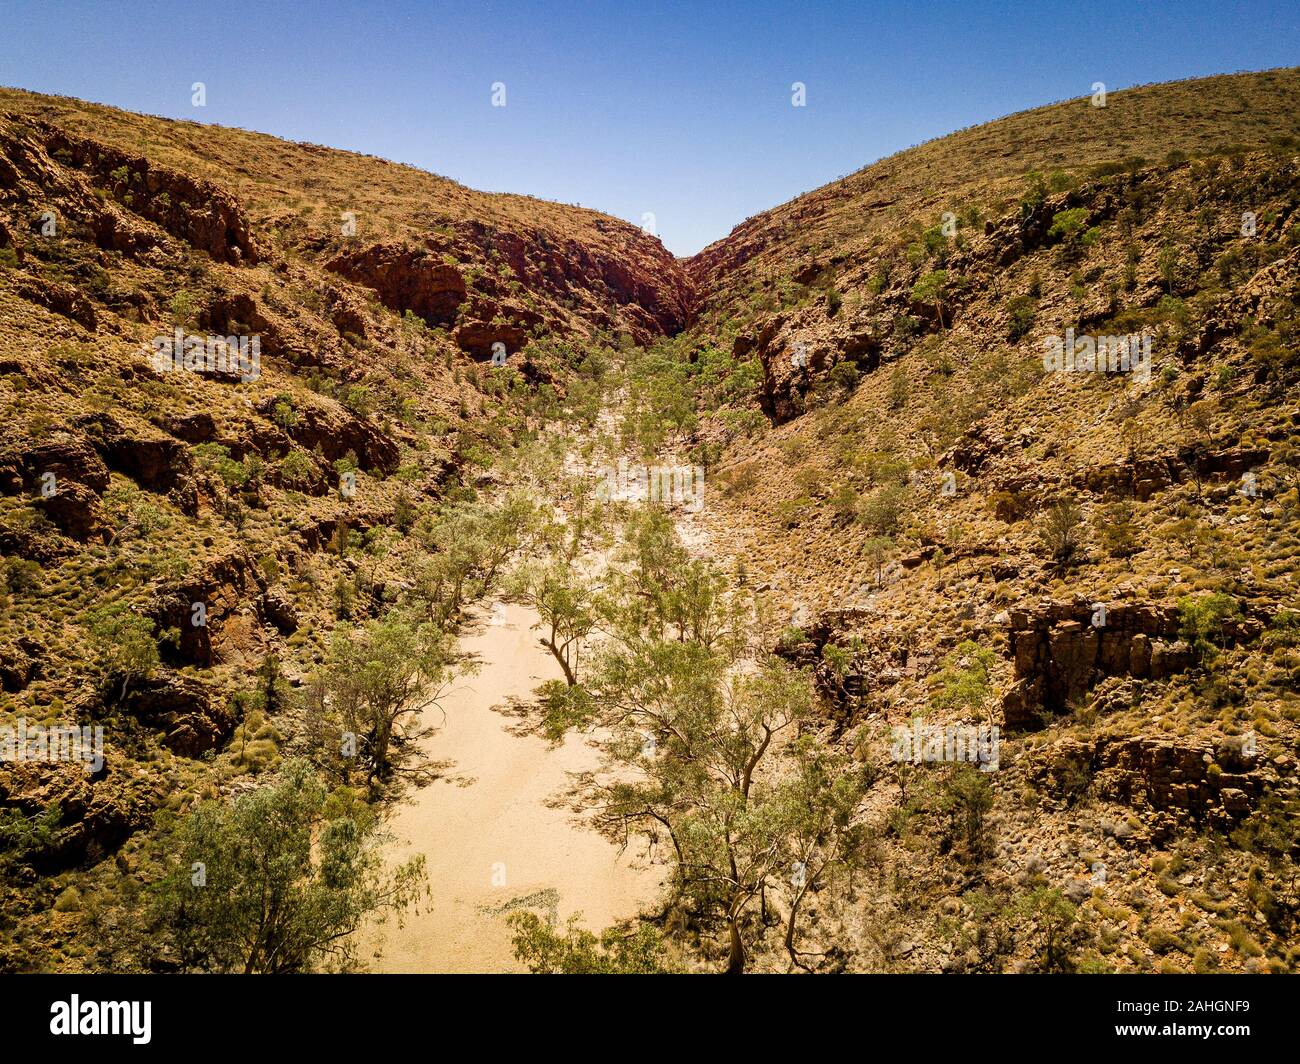 Die Dry Creek Bed bei Redbank Gorge in den West MacDonnell Ranges, Northern Territory, Australien Stockfoto